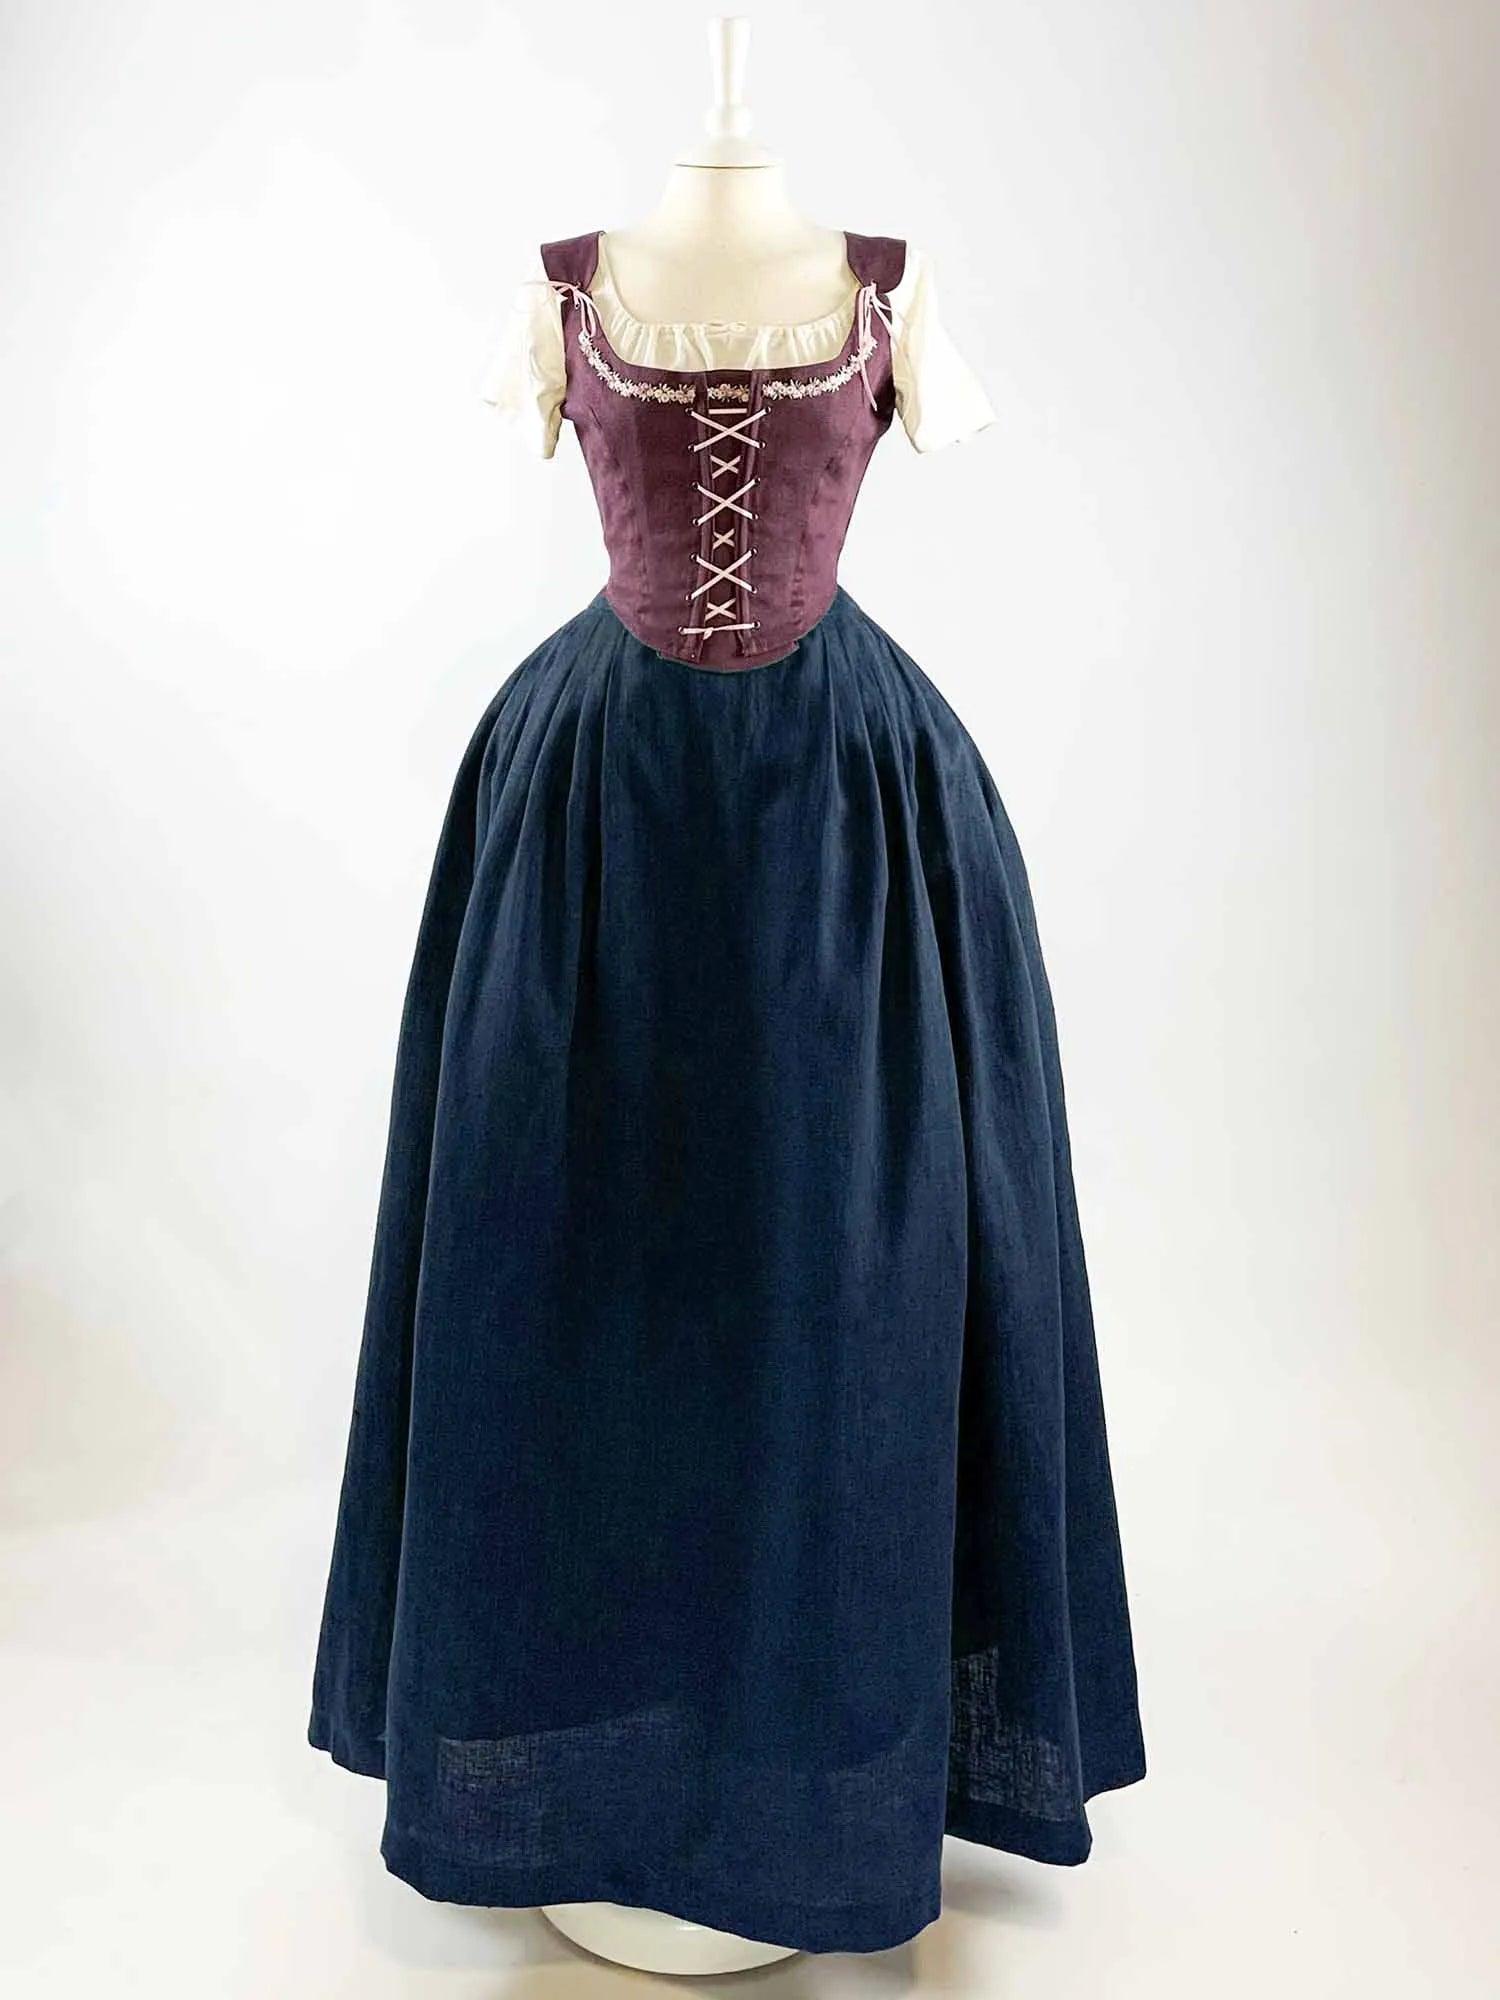 ISOLDE, Renaissance Costume in Purple &amp; Navy Blue Linen - Atelier Serraspina - Costume Renaissance en Lin Violet et Bleu marine